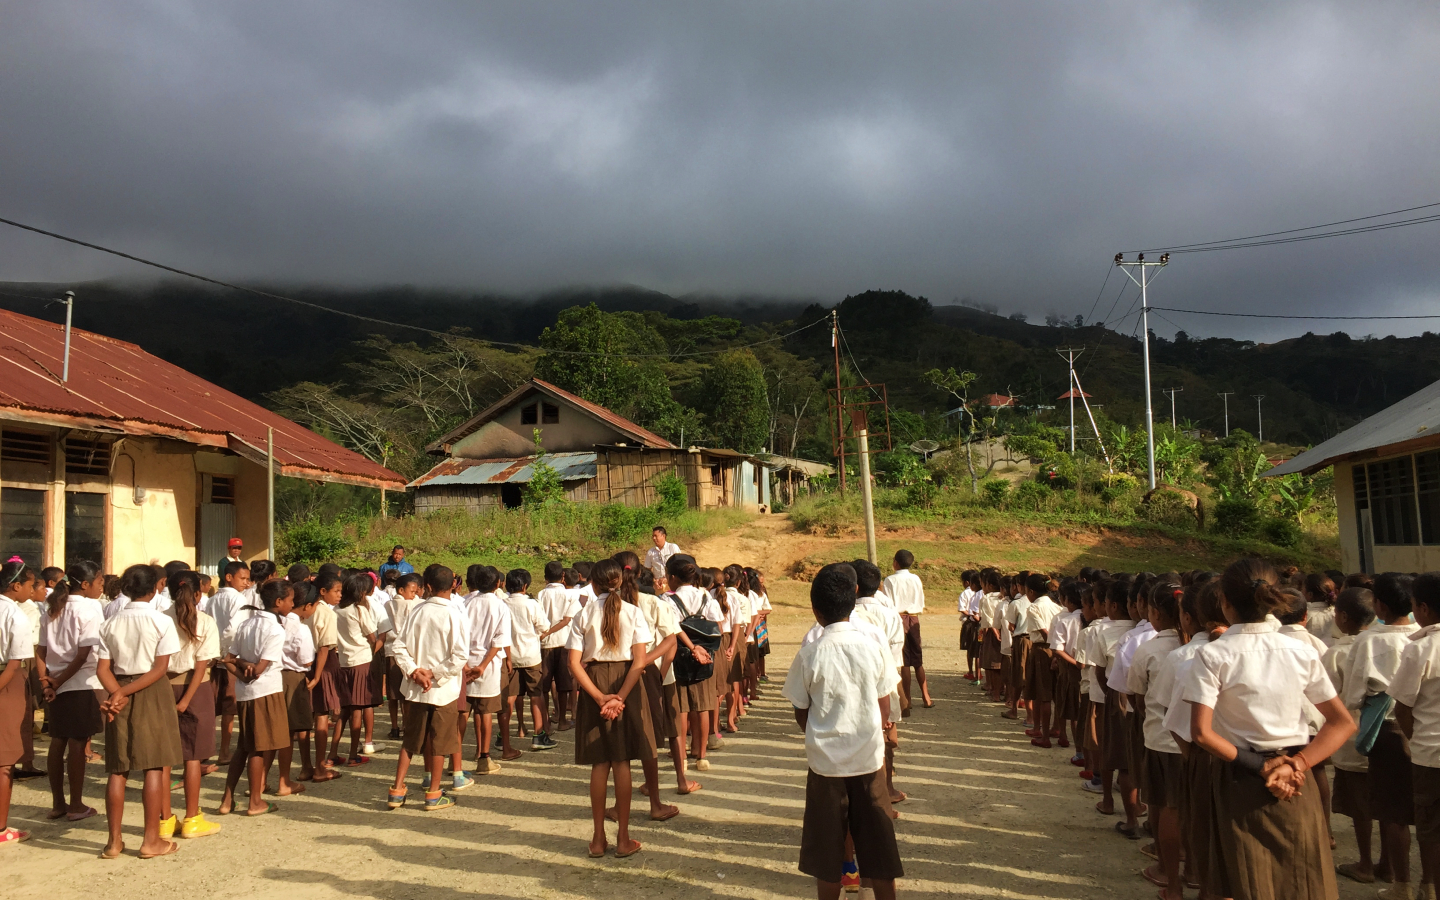 Children lining up at school in Timor-Leste